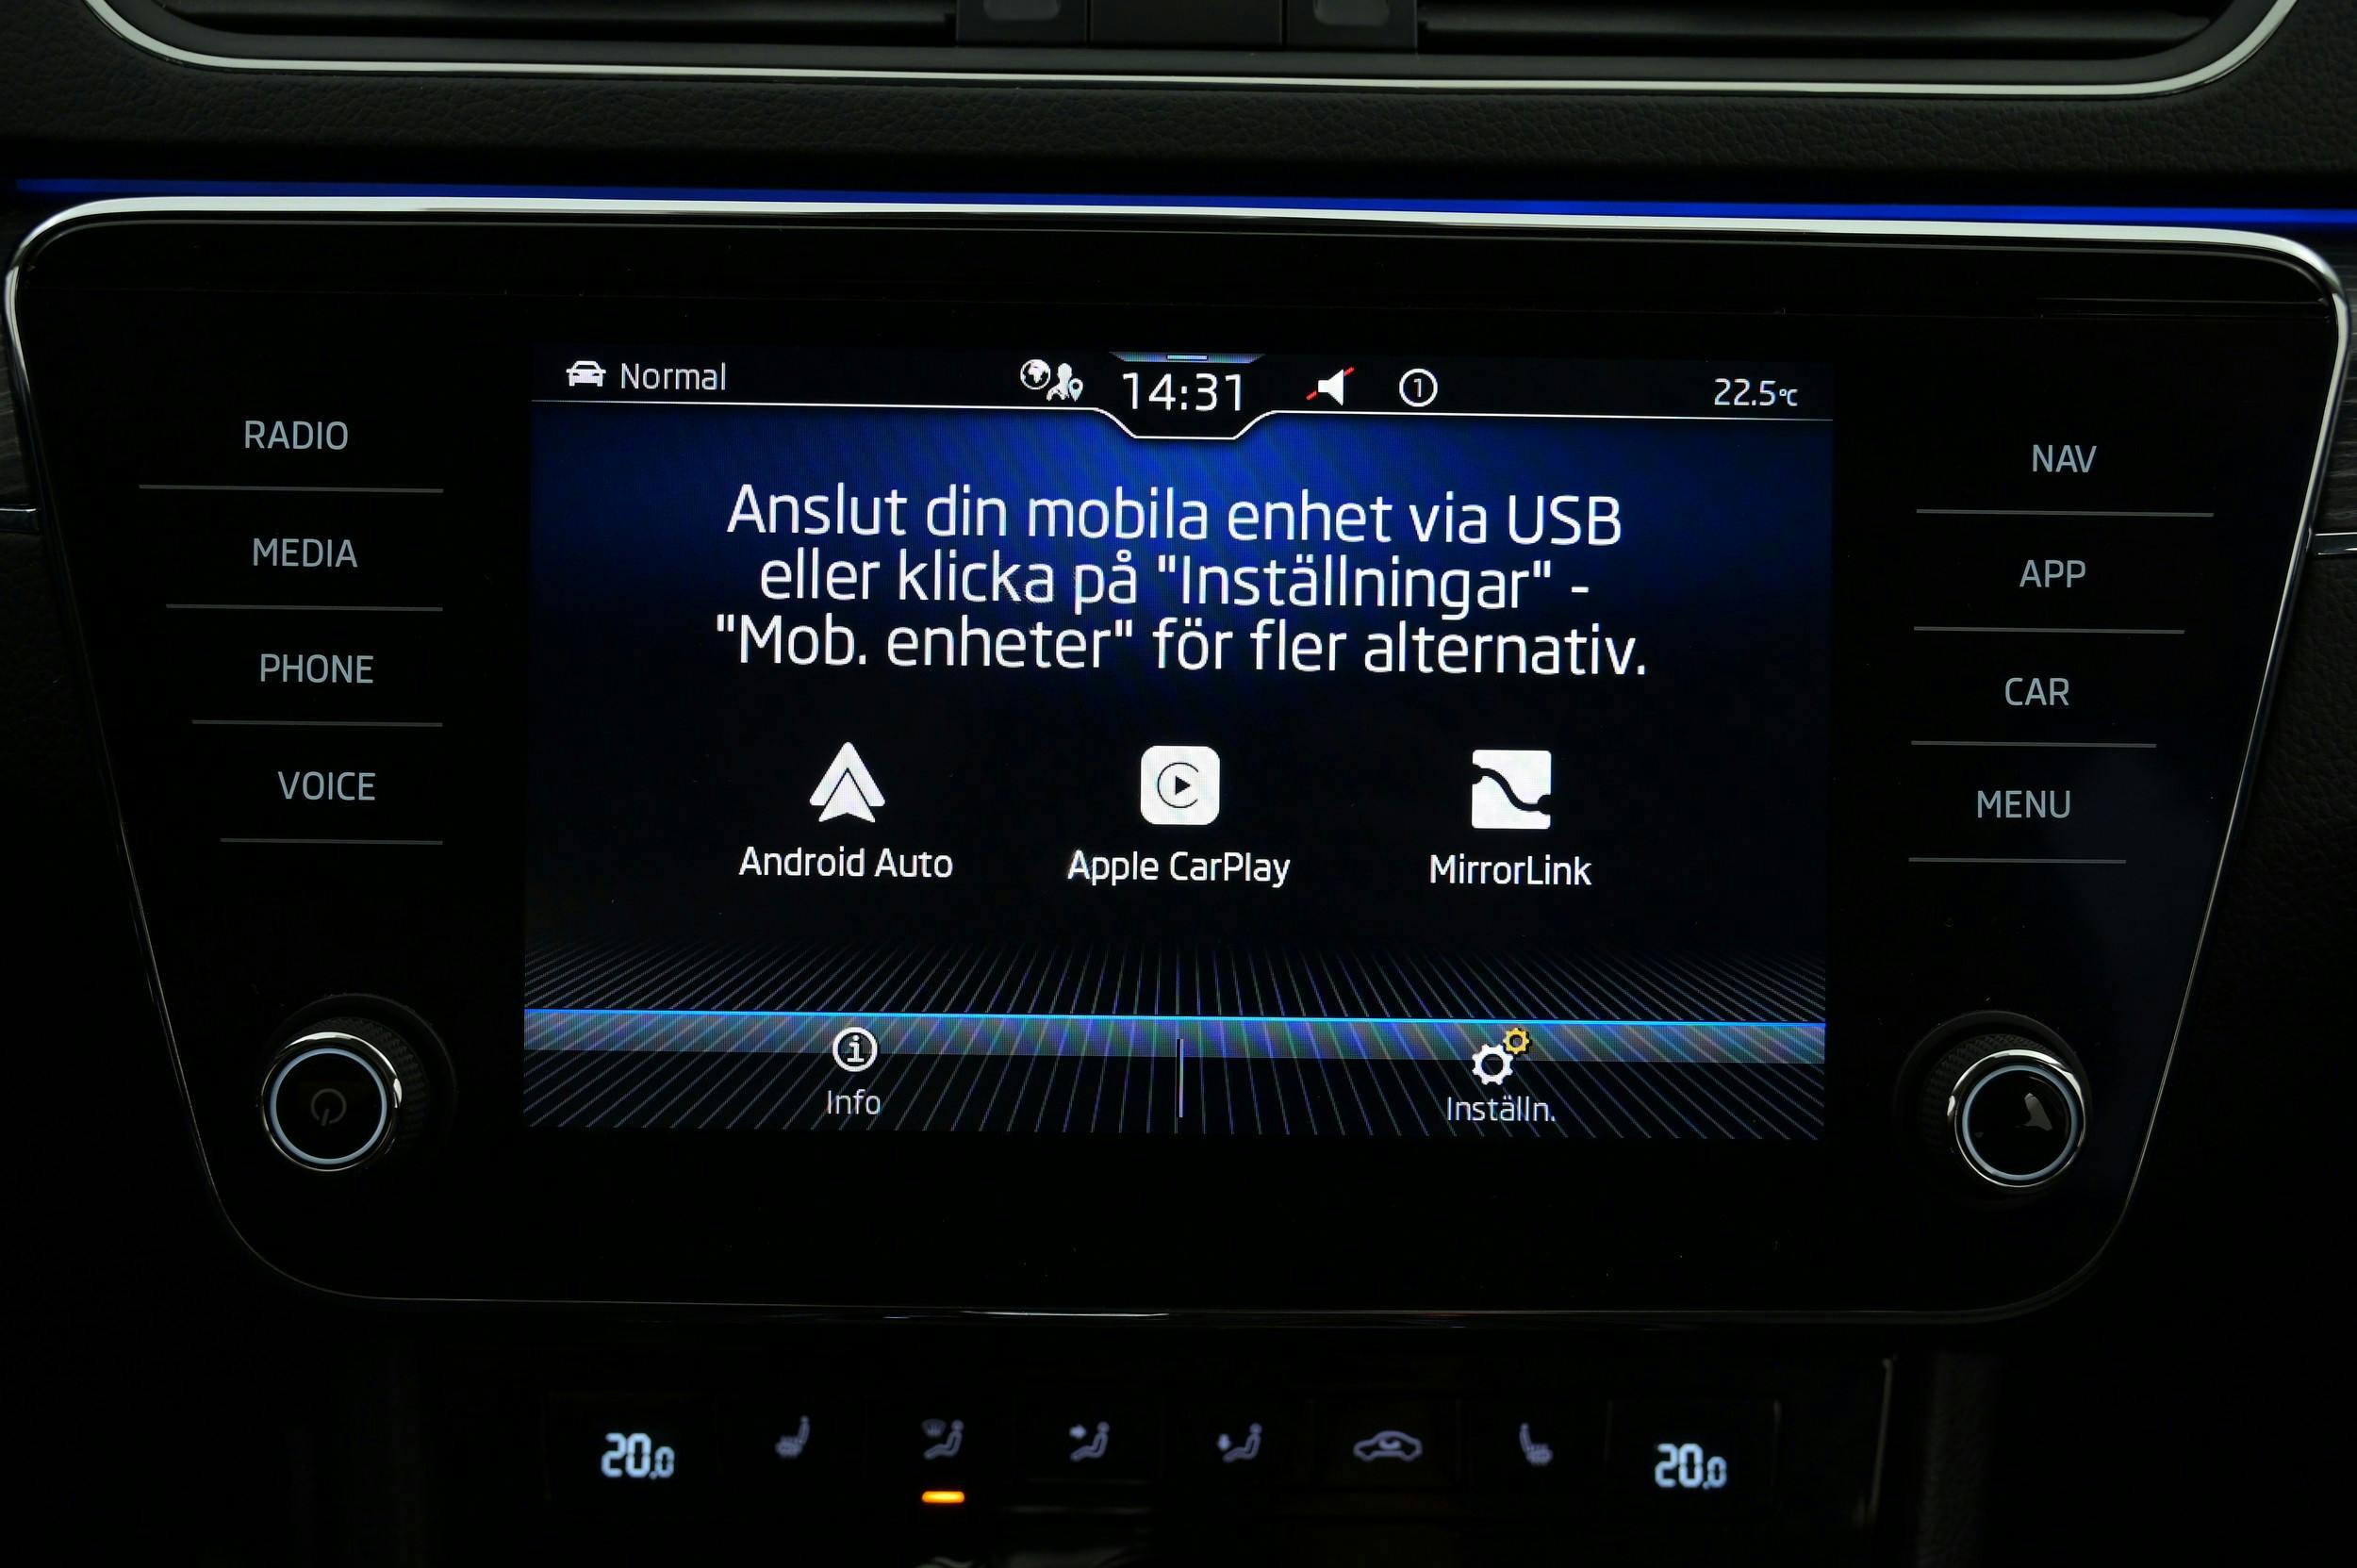 Infotainmentsystem: Android Auto, Apple CarPlay, MirrorLink